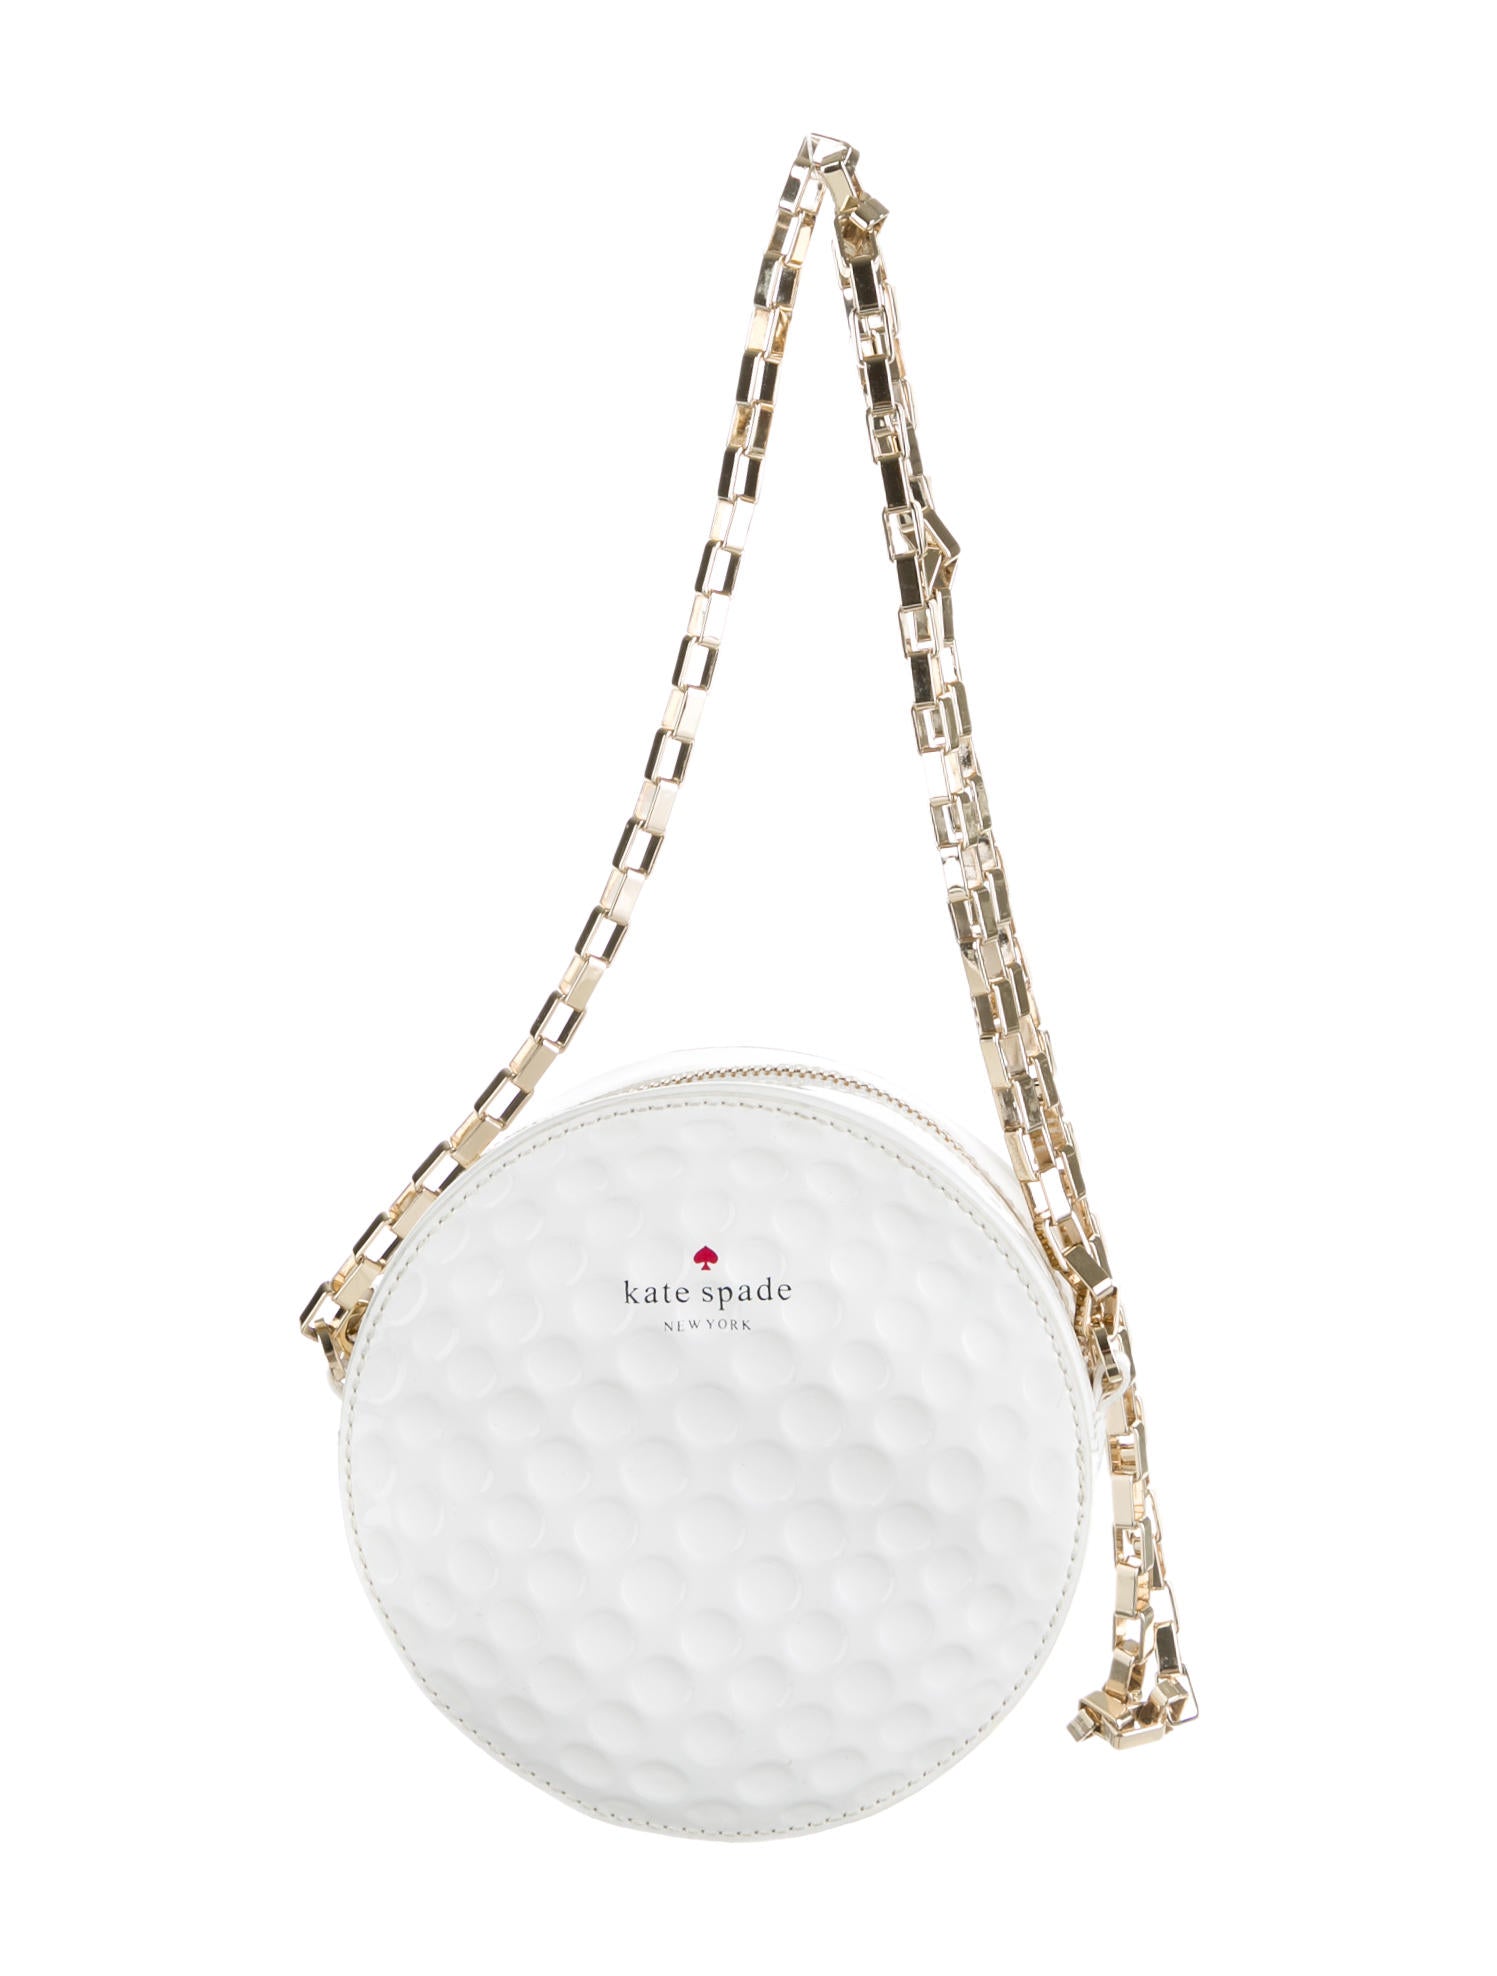 Kate Spade on Par Golf Ball Long Pendant Necklace - eBay ($184.99)